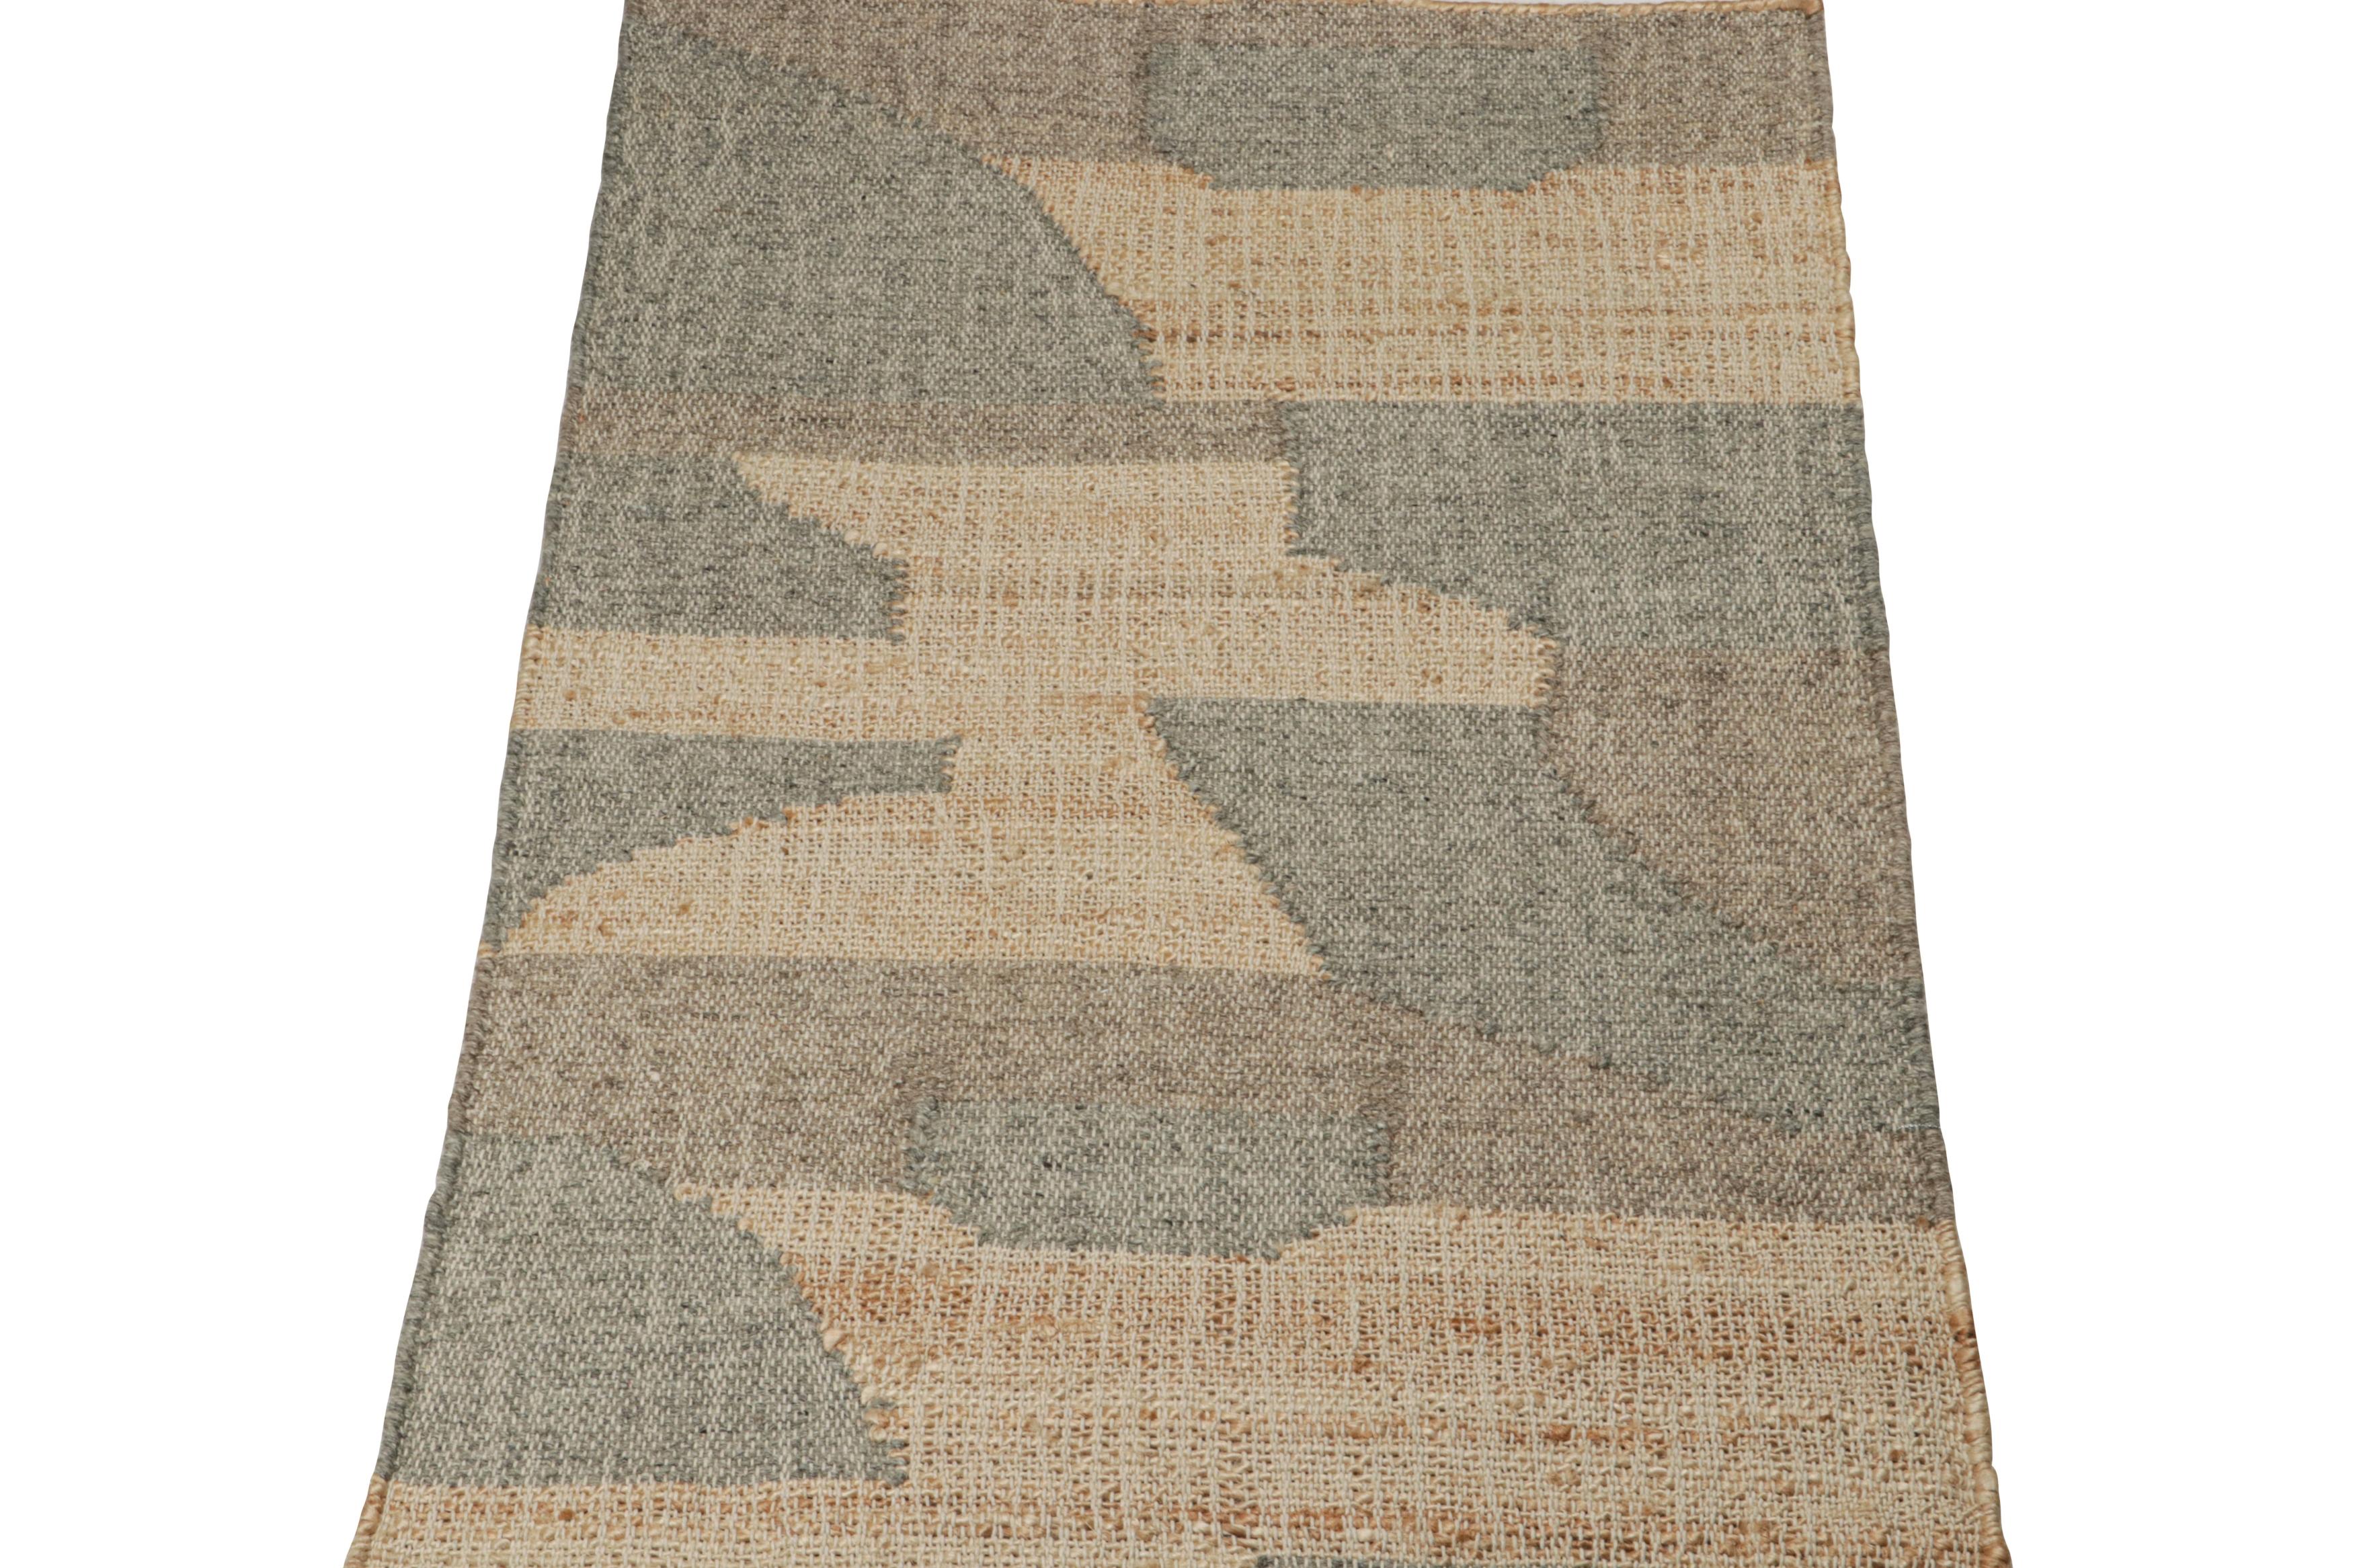 Indian Rug & Kilim’s Modern Kilim rug in Beige-Brown & Grey Patterns For Sale